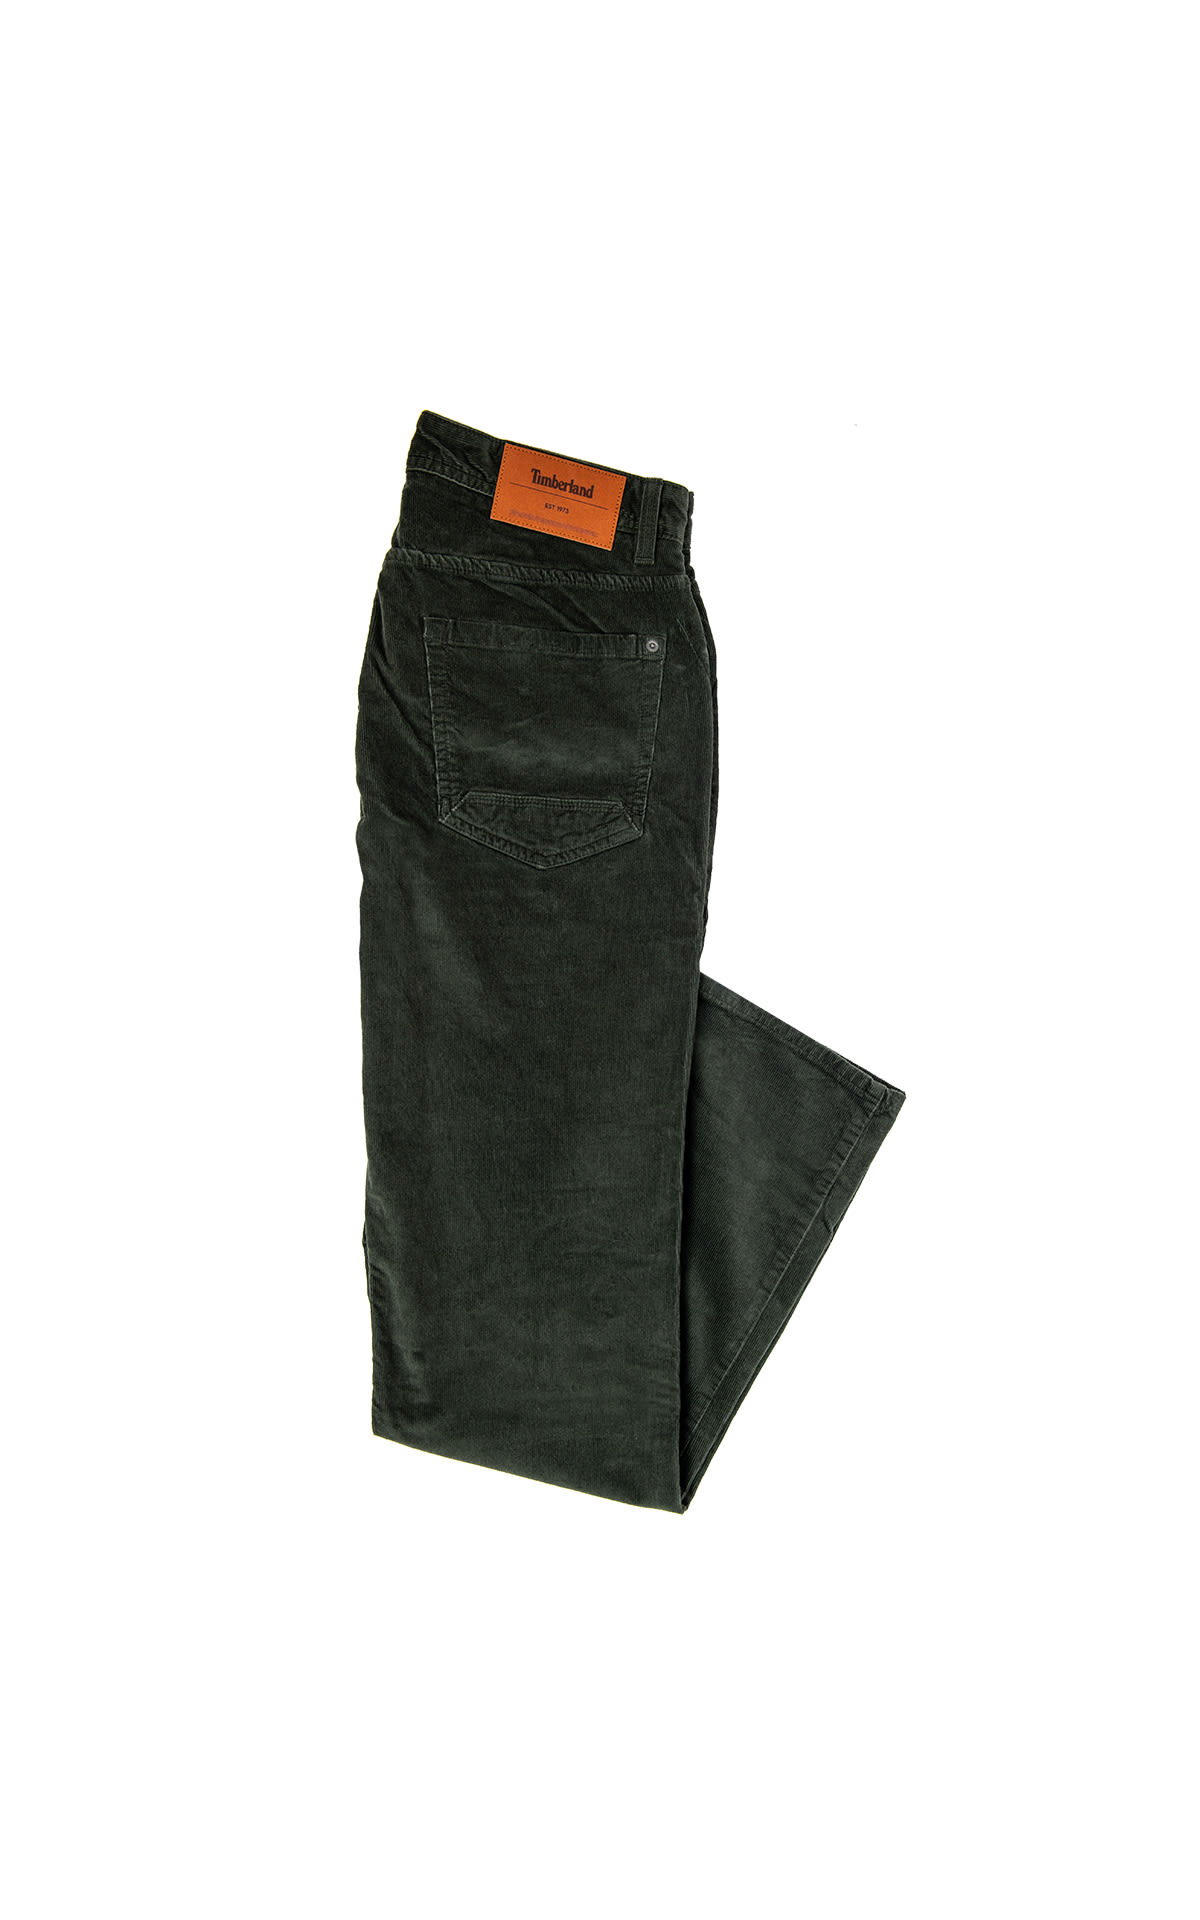 Timberland Black jeans